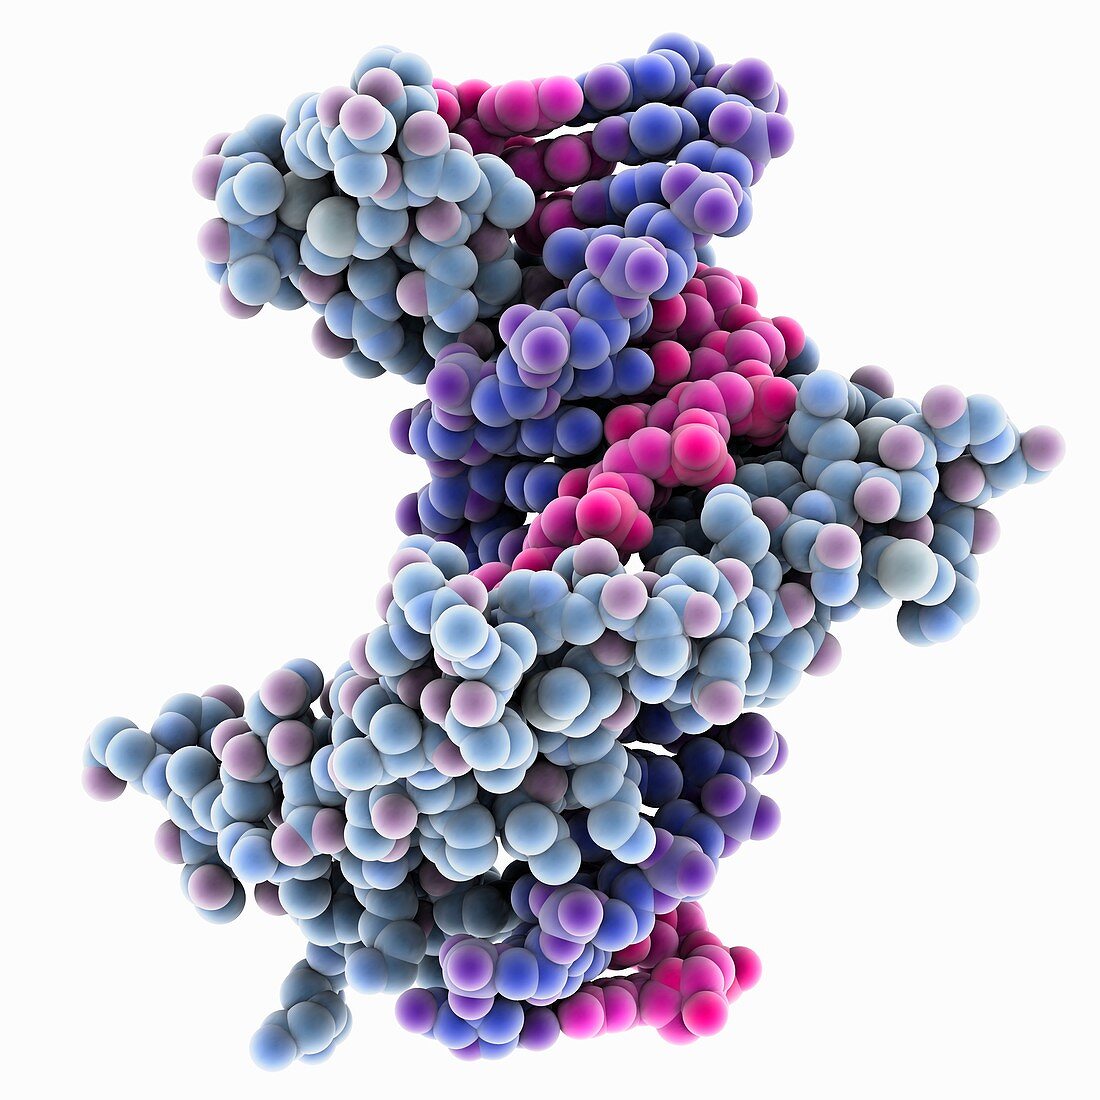 Blunt DNA complexed with zinc finger protein, molecular model